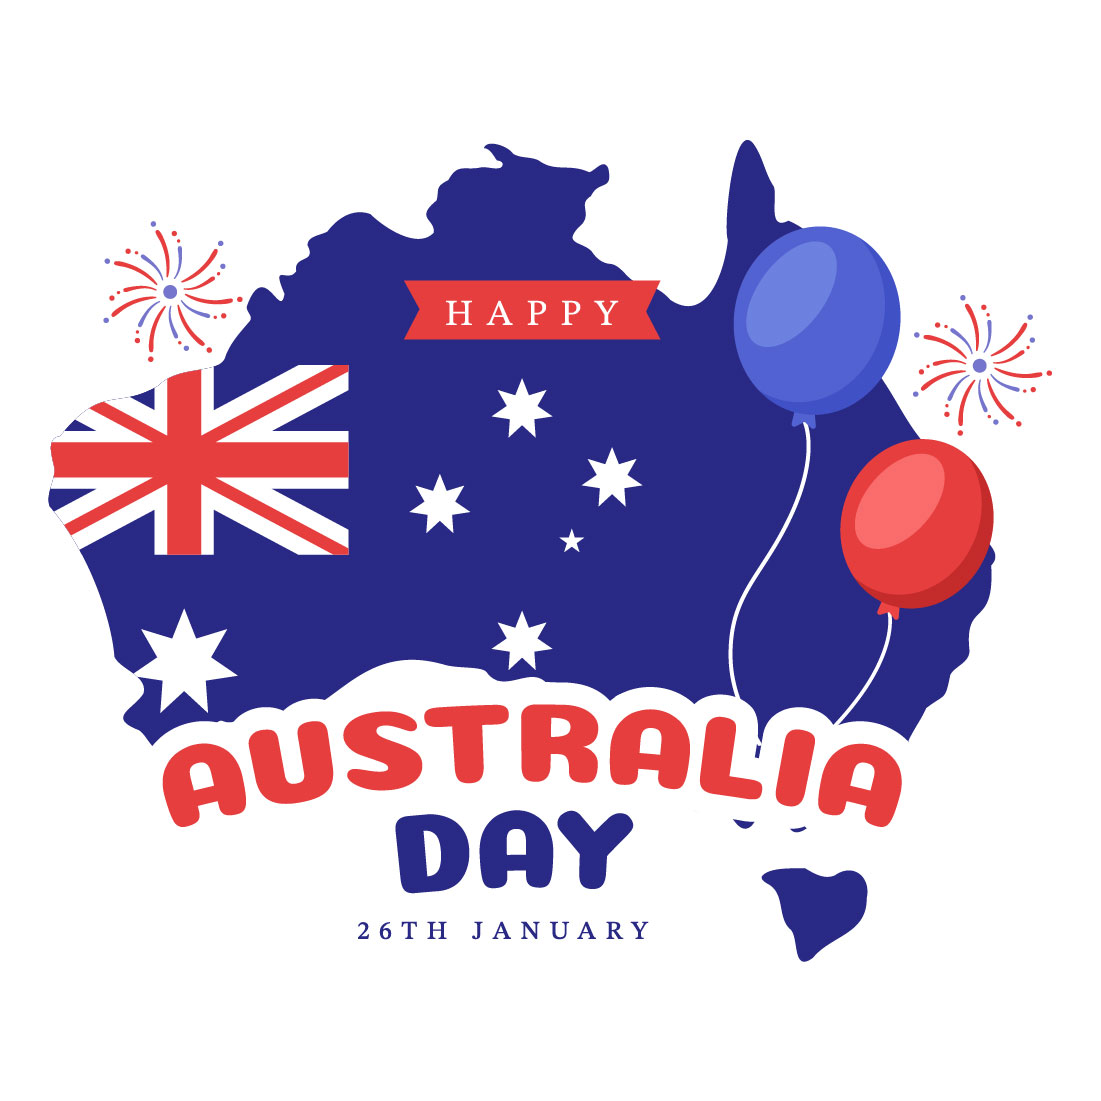 Cartoon Happy Australia Day Illustration Design cover image.